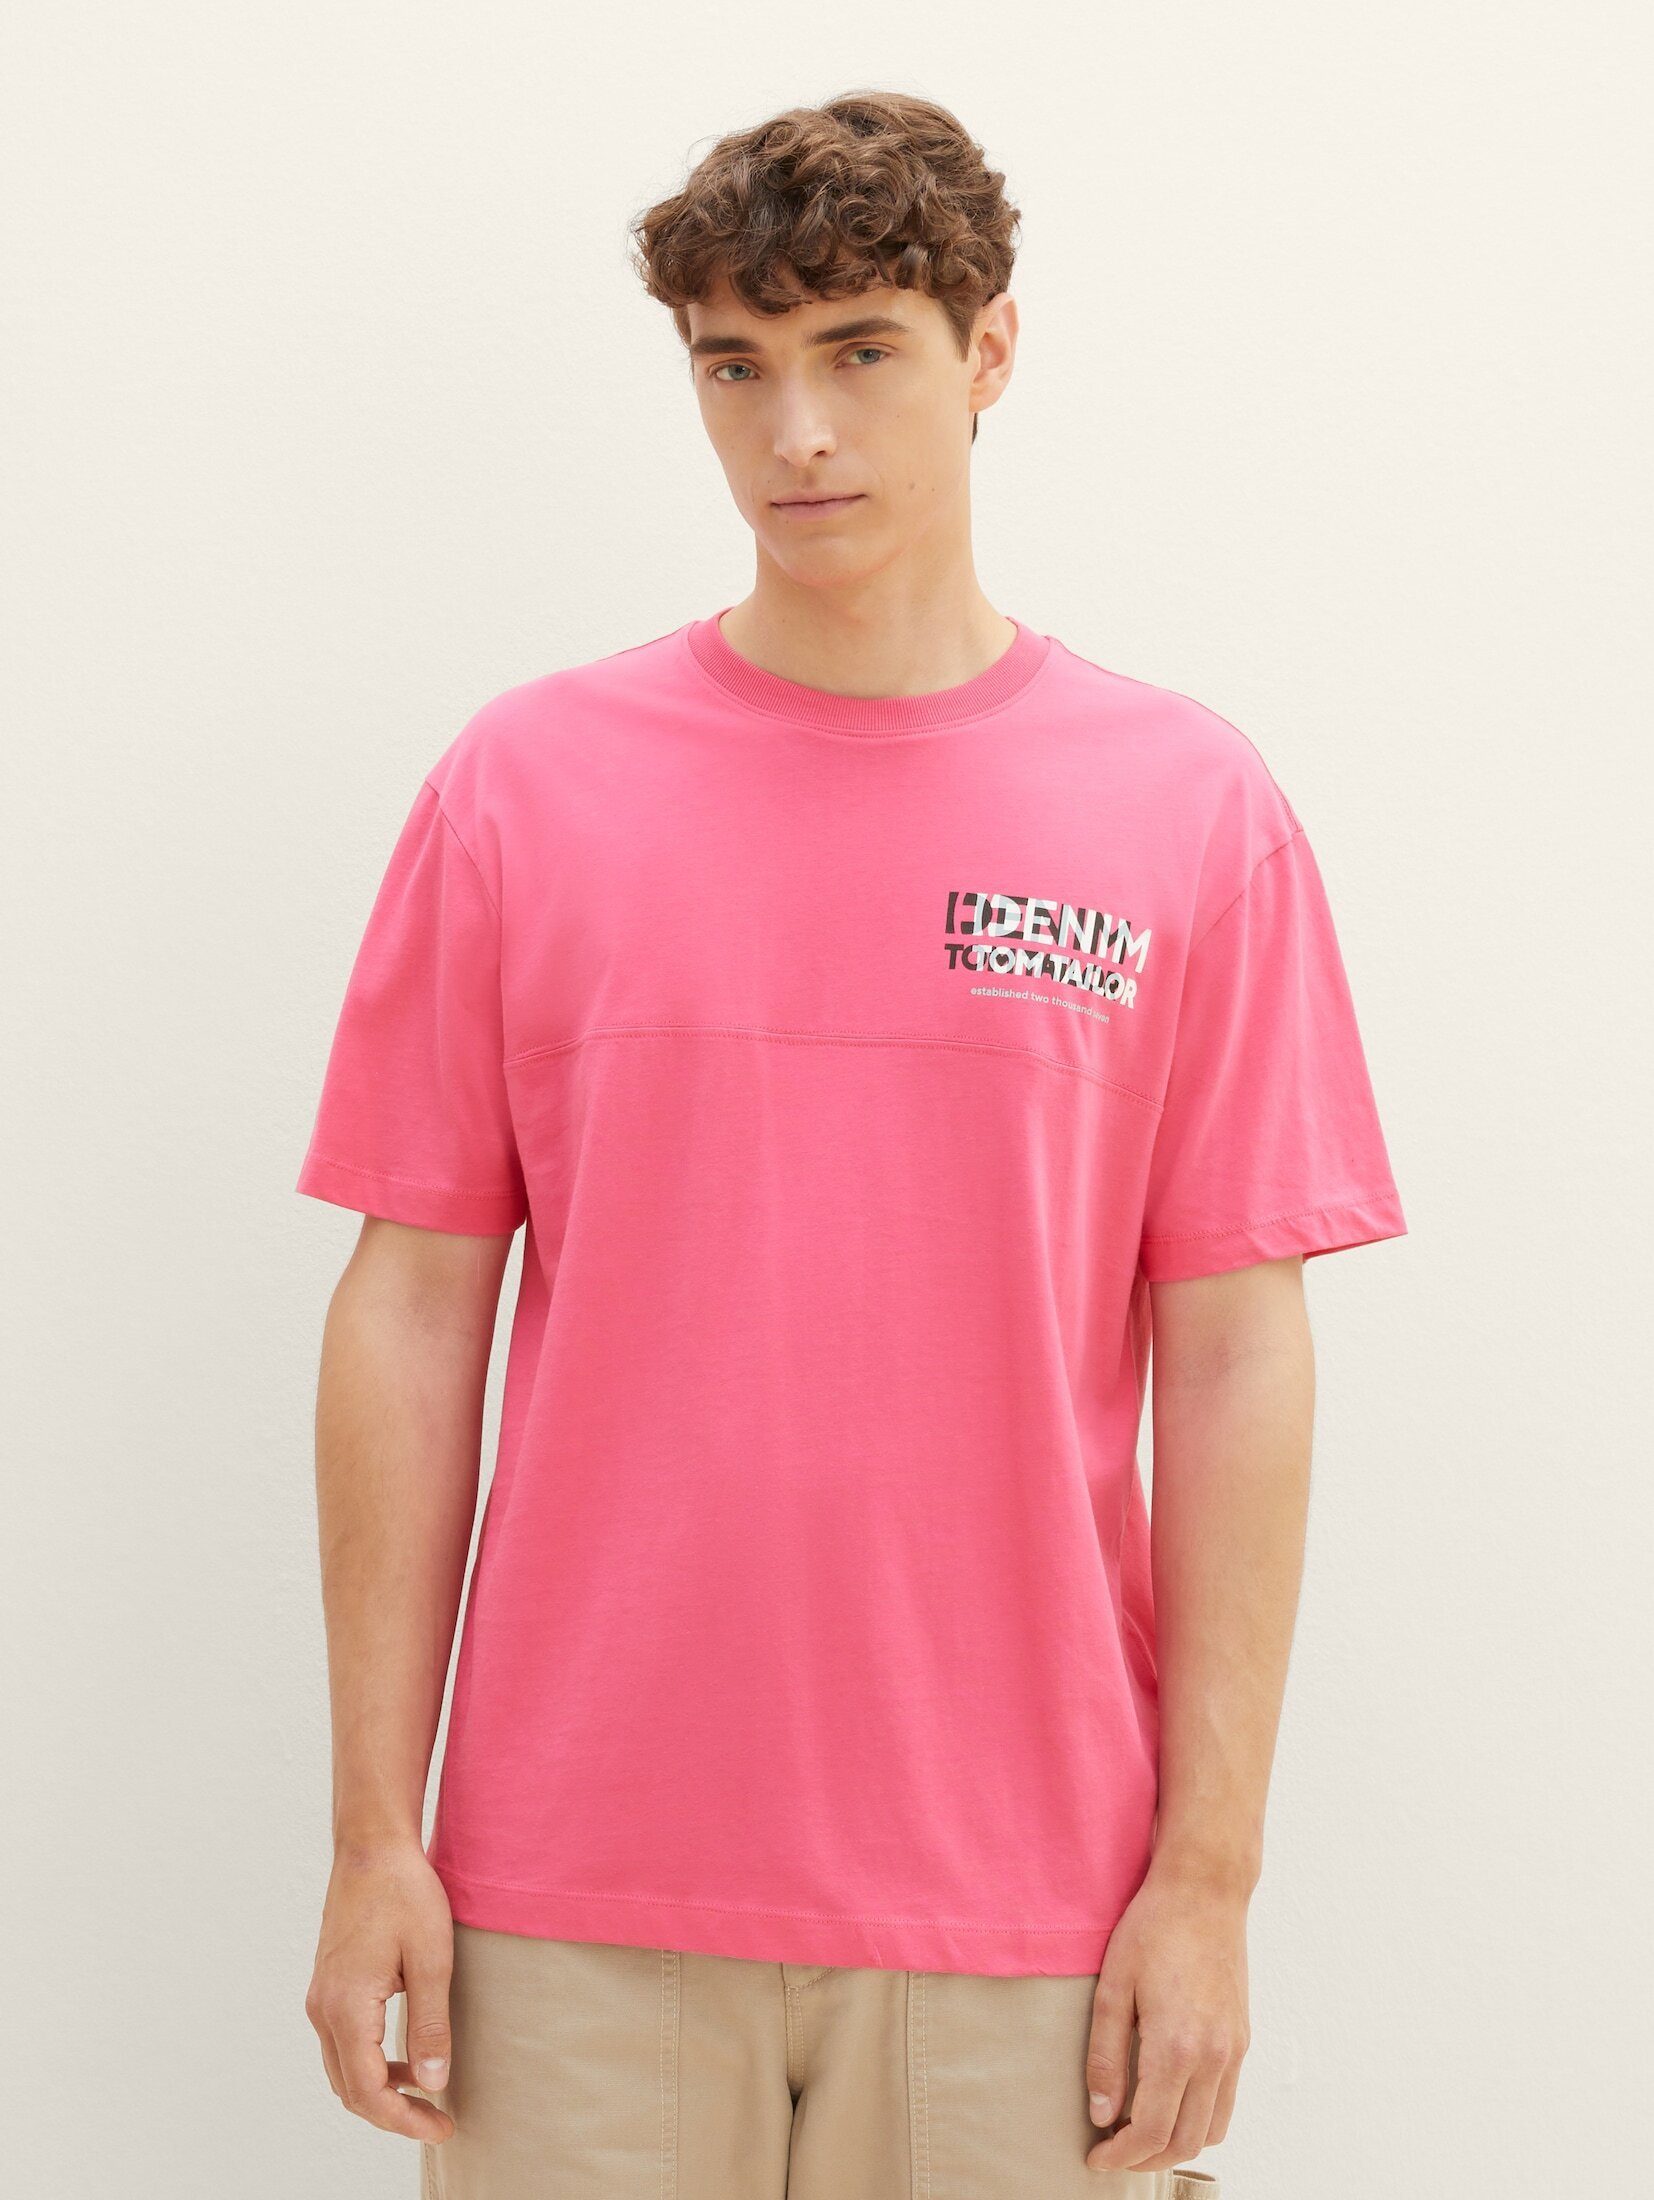 TOM TAILOR Denim T-Shirt T-Shirt mit Bio-Baumwolle flashy flame pink